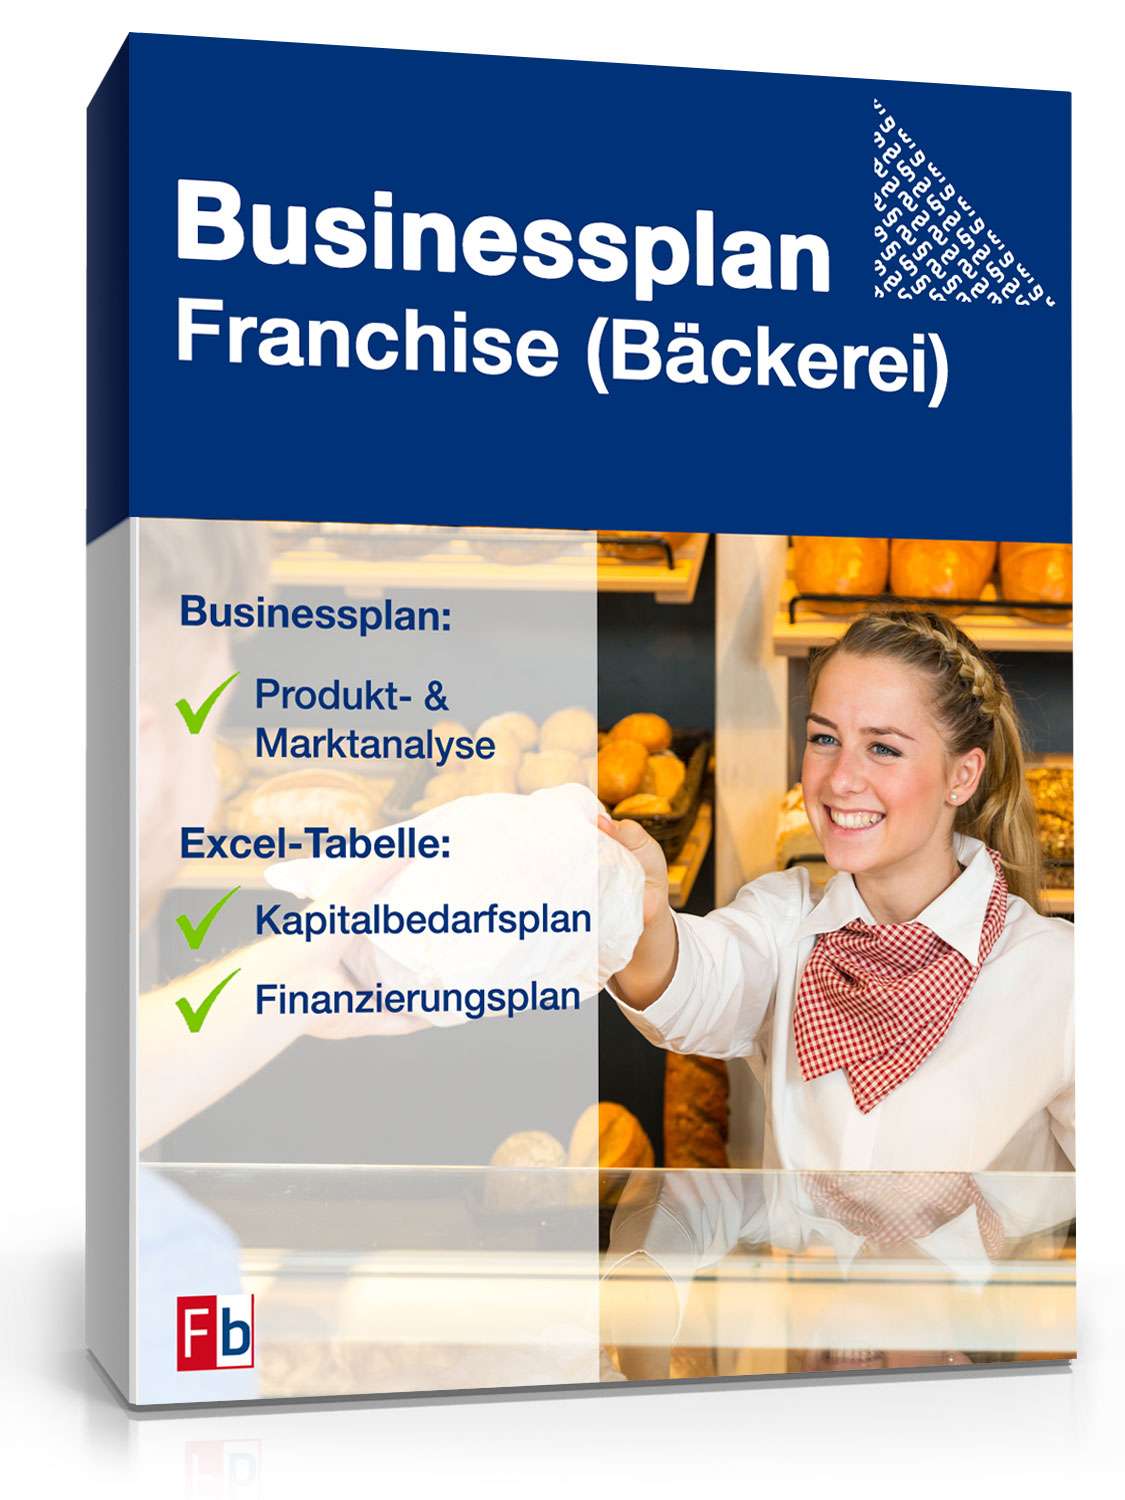 Hauptbild des Produkts: Businessplan Franchise (Bäckerei)